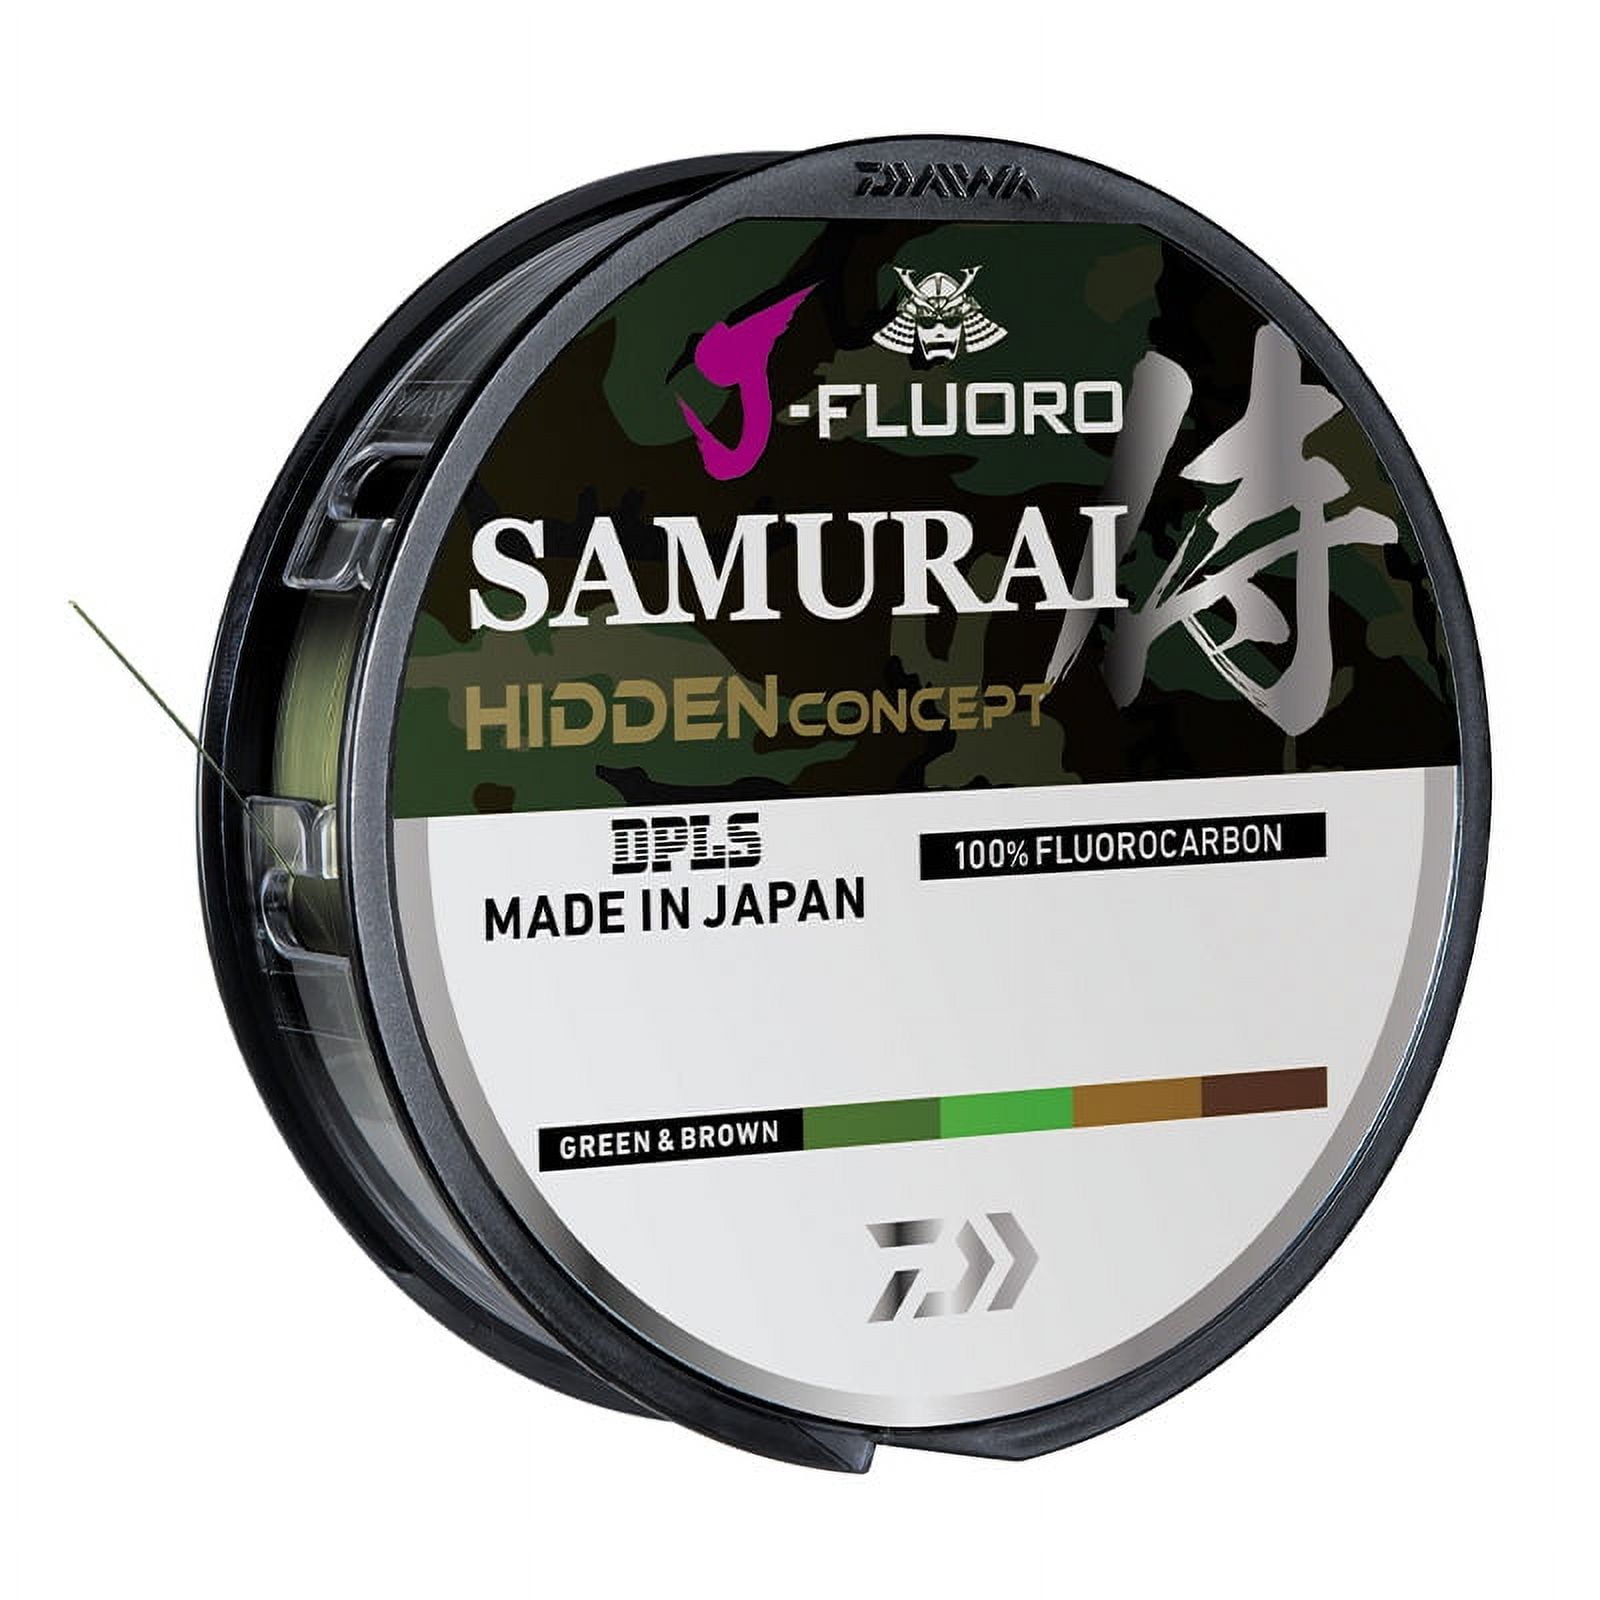 Daiwa JFS12-1000H Jfluoro Hidden Samurai line, 12lb test, 1000yd 